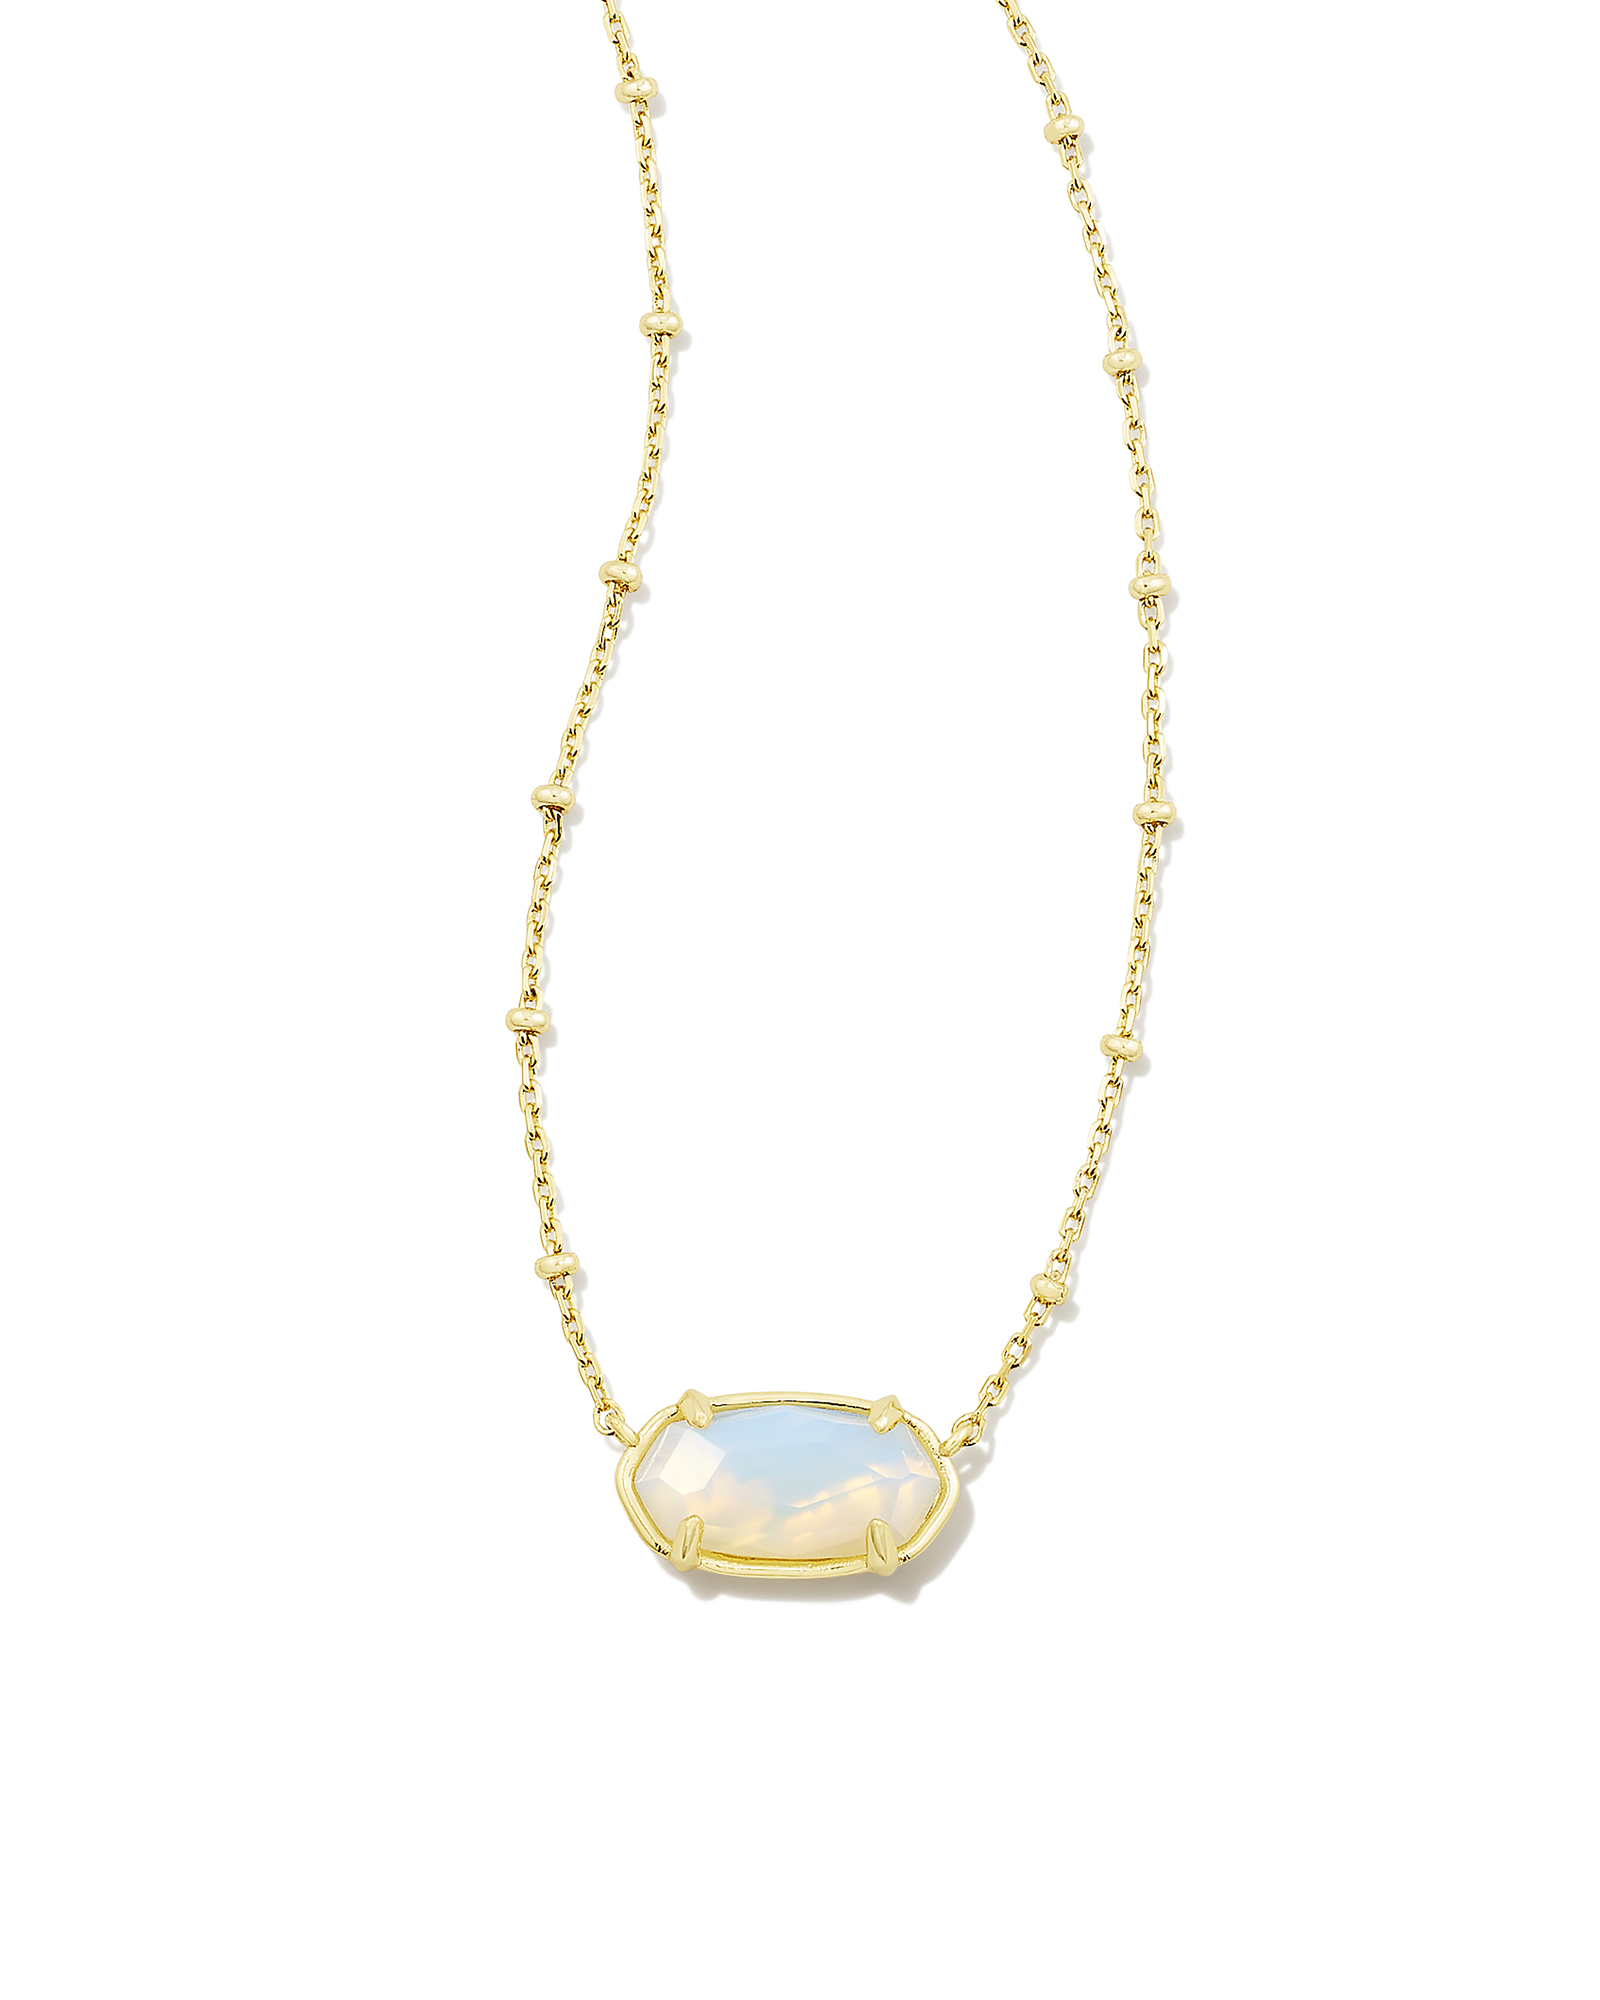 Kendra Scott Yellow Gold Necklaces | Mercari